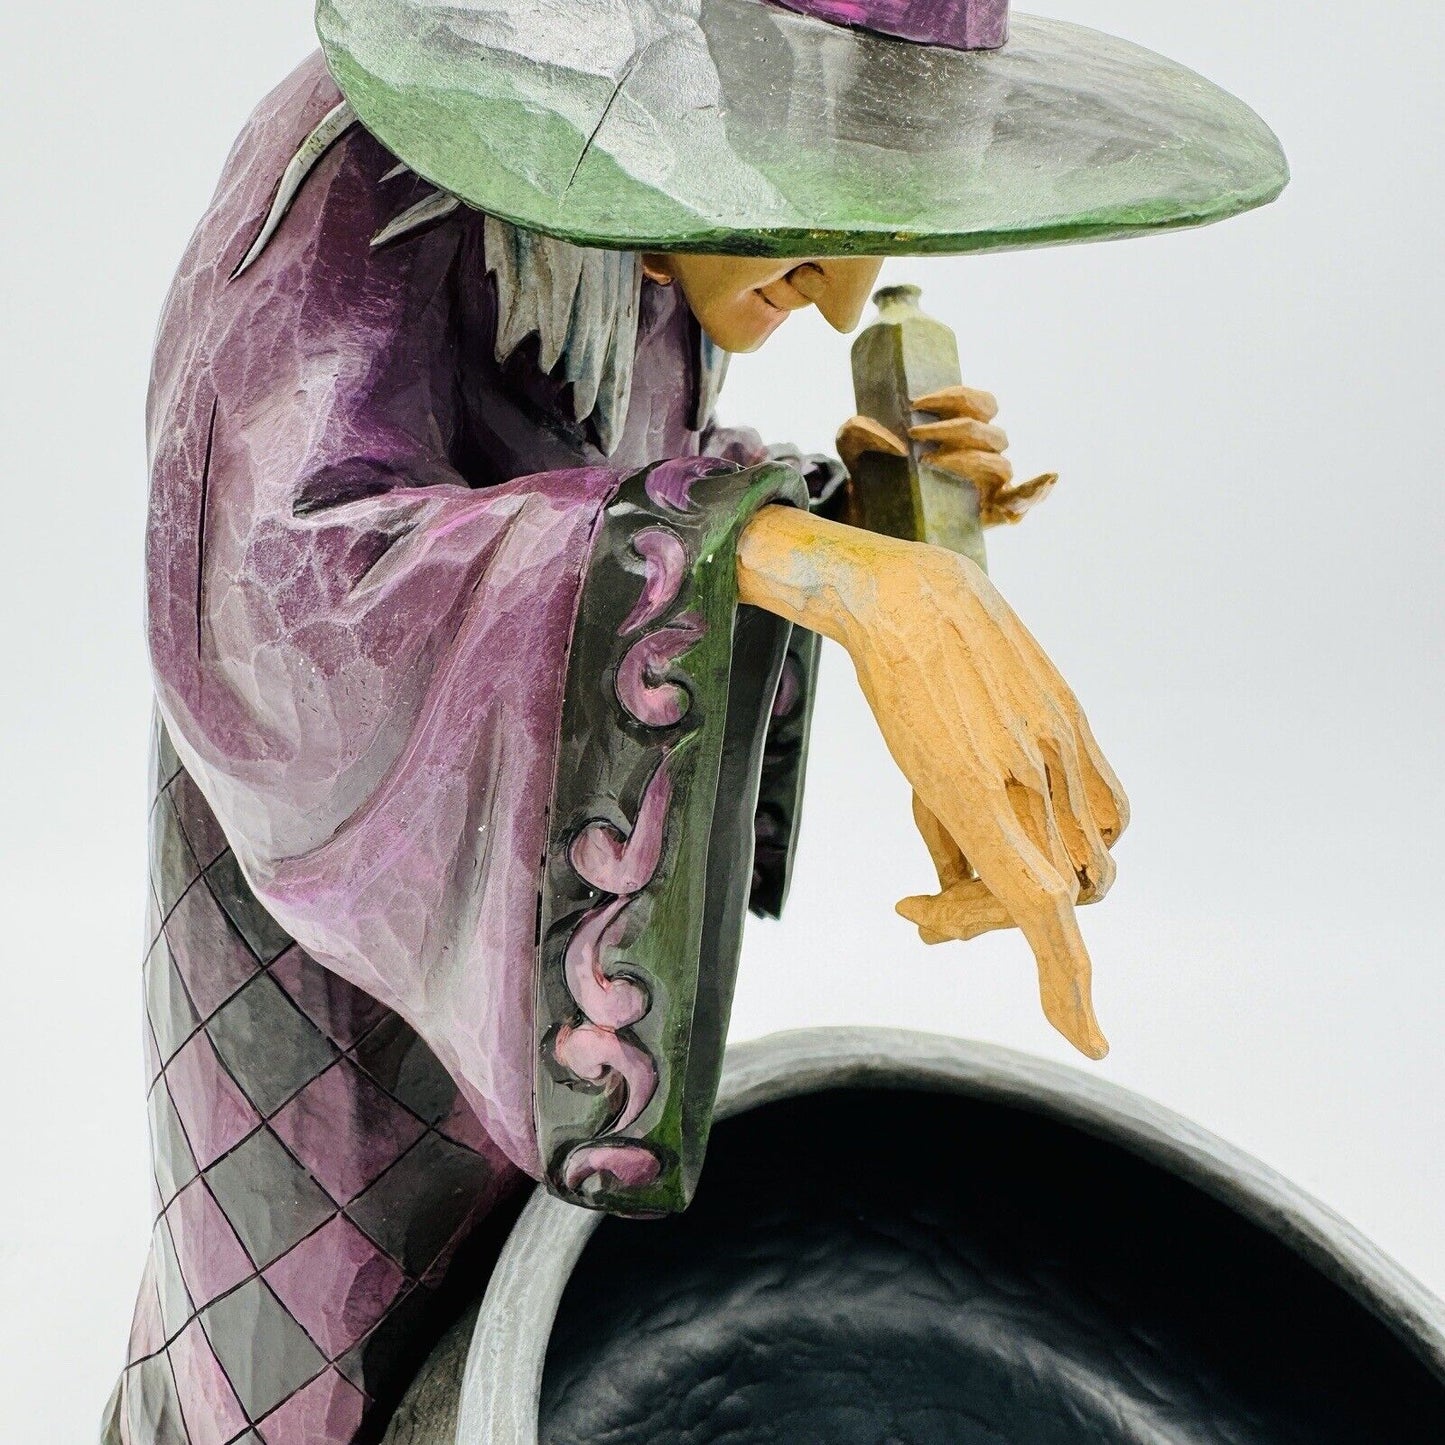 Jim Shore Heartwood Creek Witch's Brew Cauldron Candy Bowl Rare Figurine